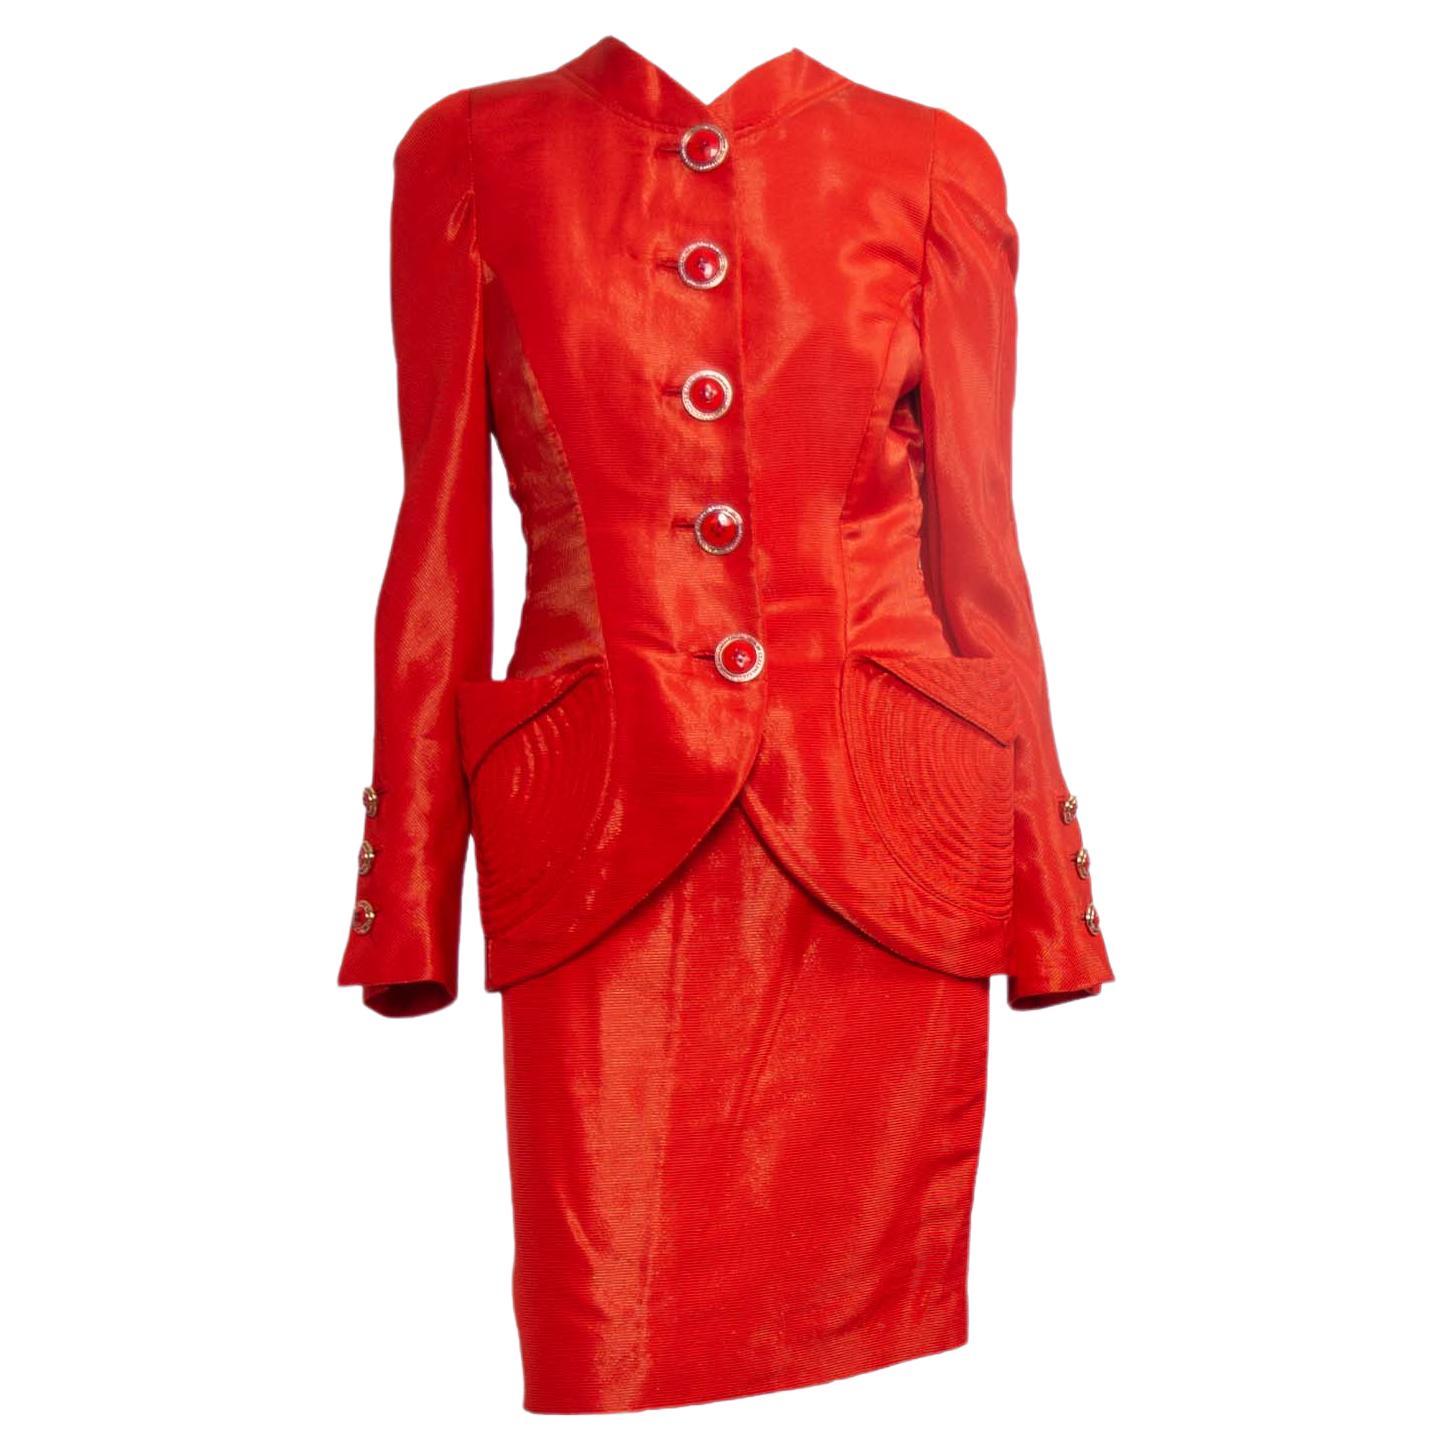 NWT S/S 1991 Gianni Versace Couture Orange Metallic Runway Skirt Suit 